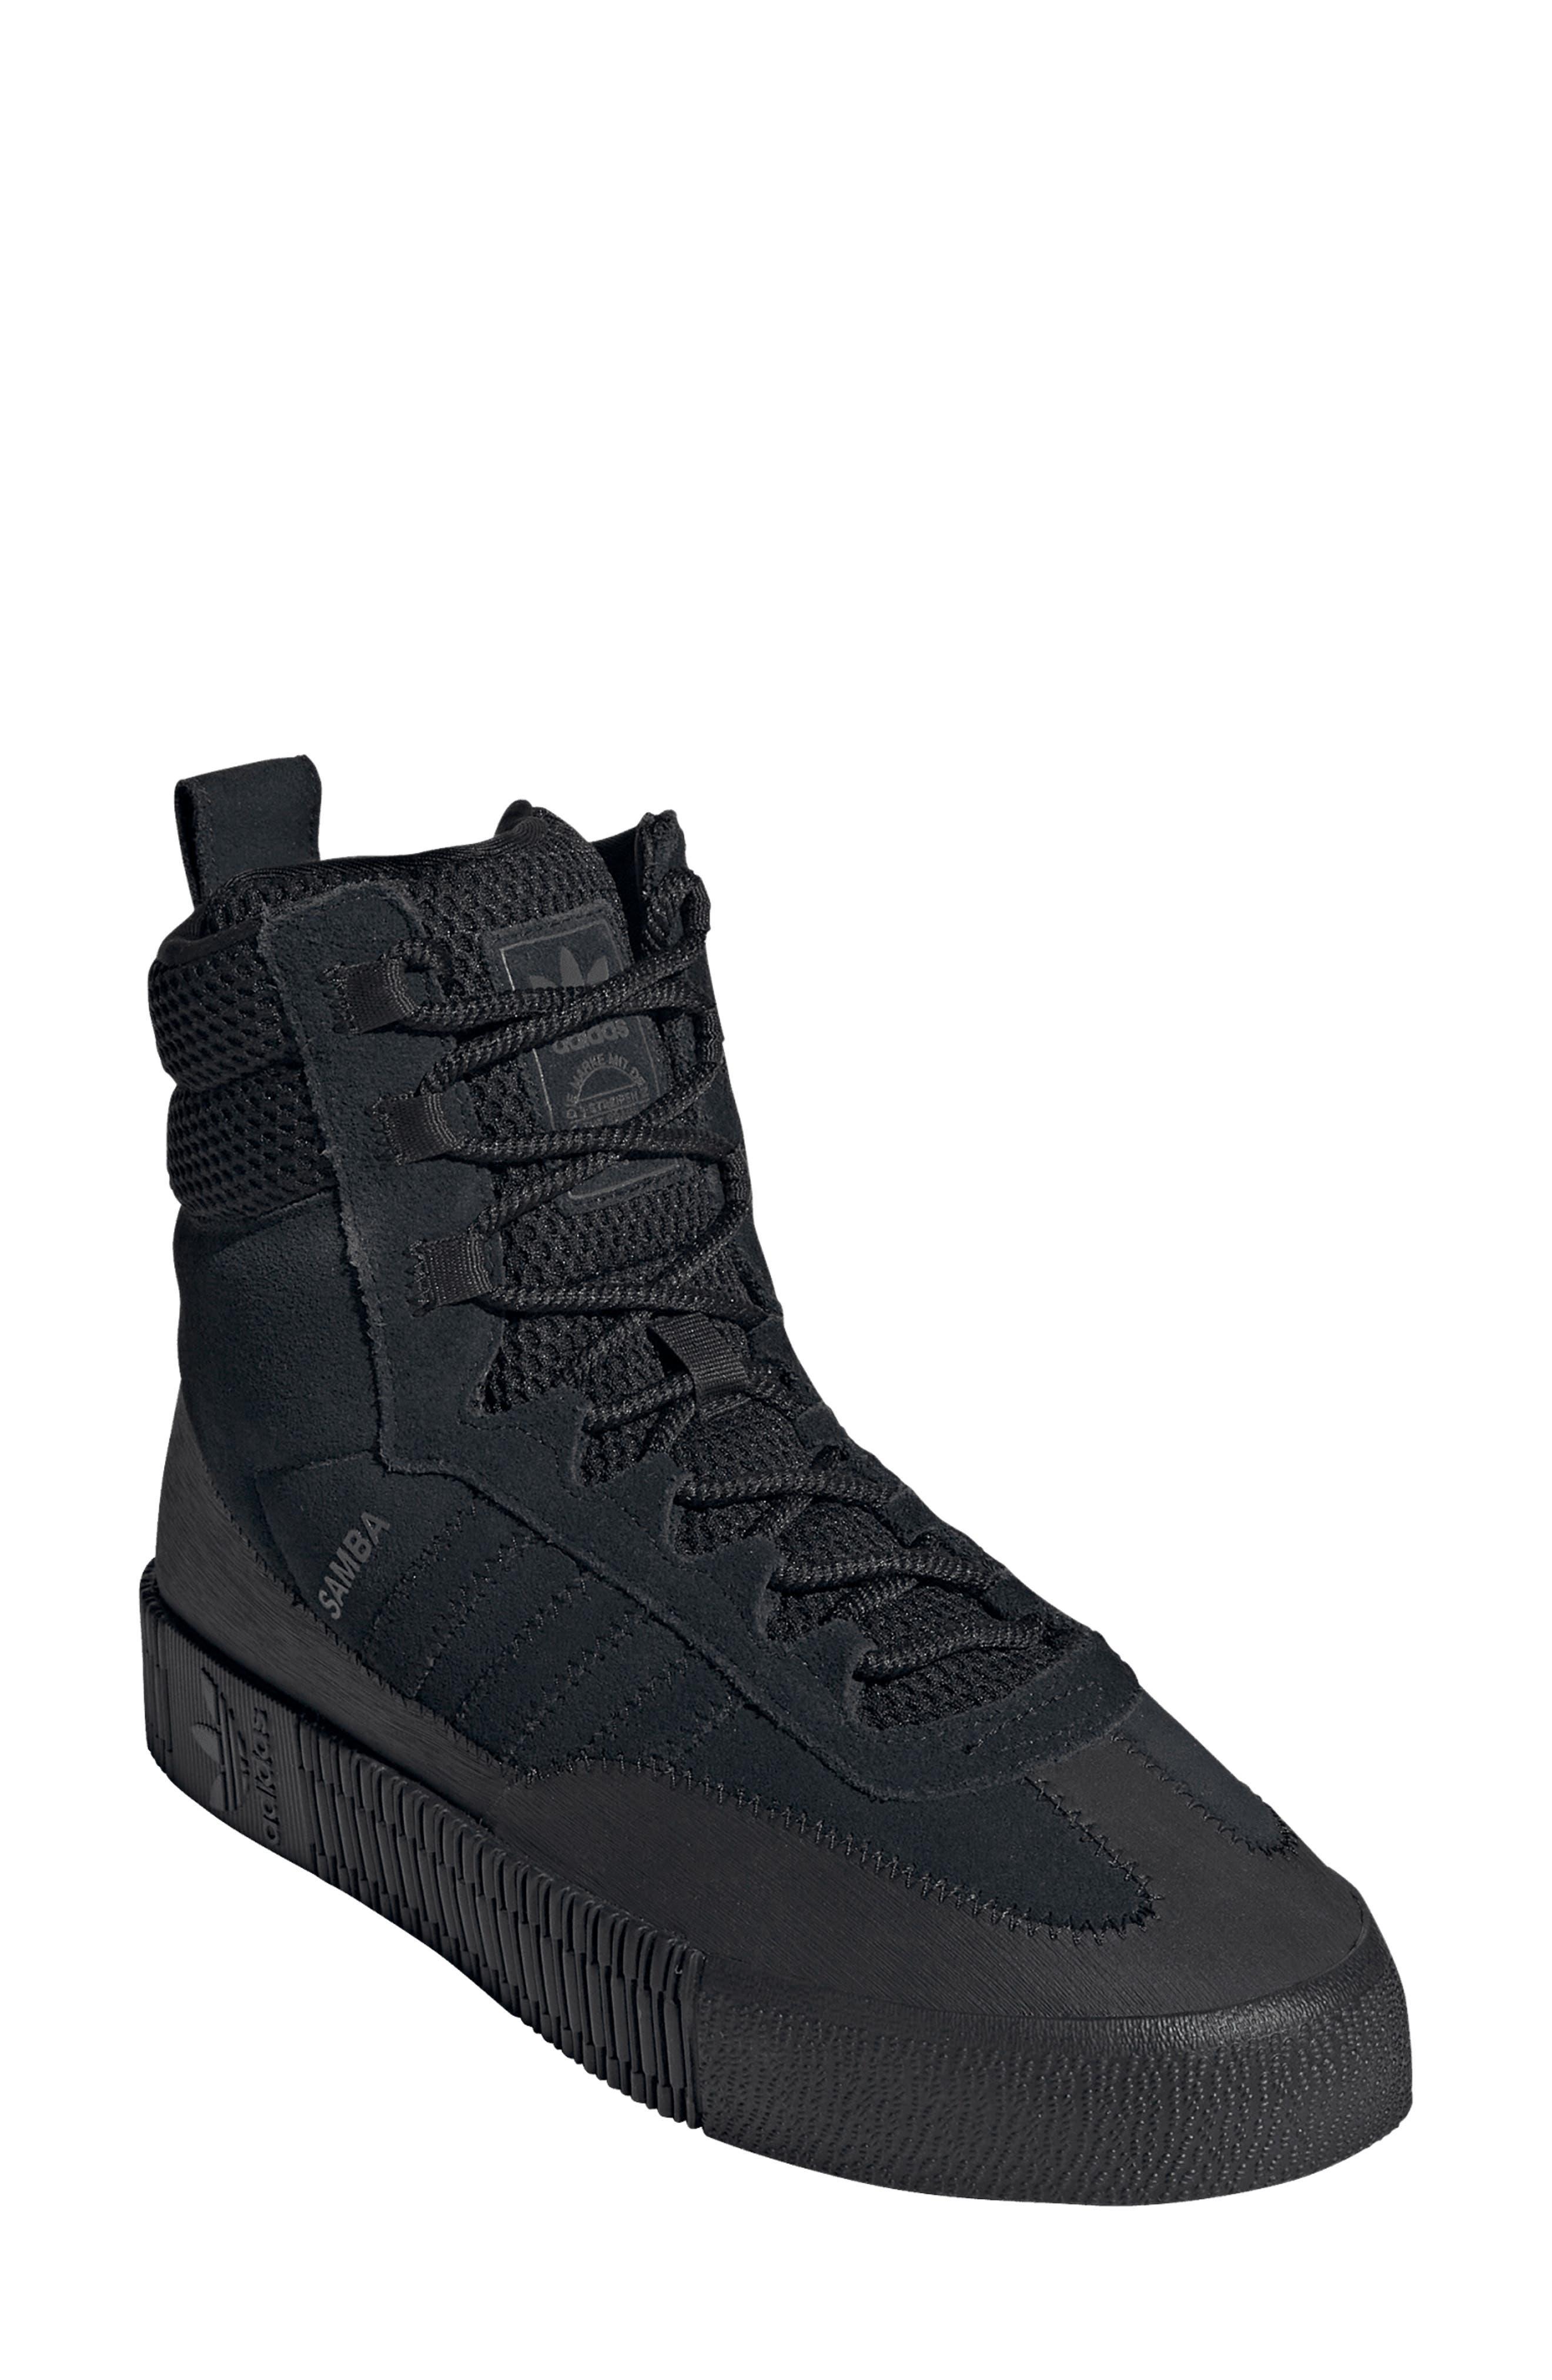 adidas Samba Boot in Black | Lyst